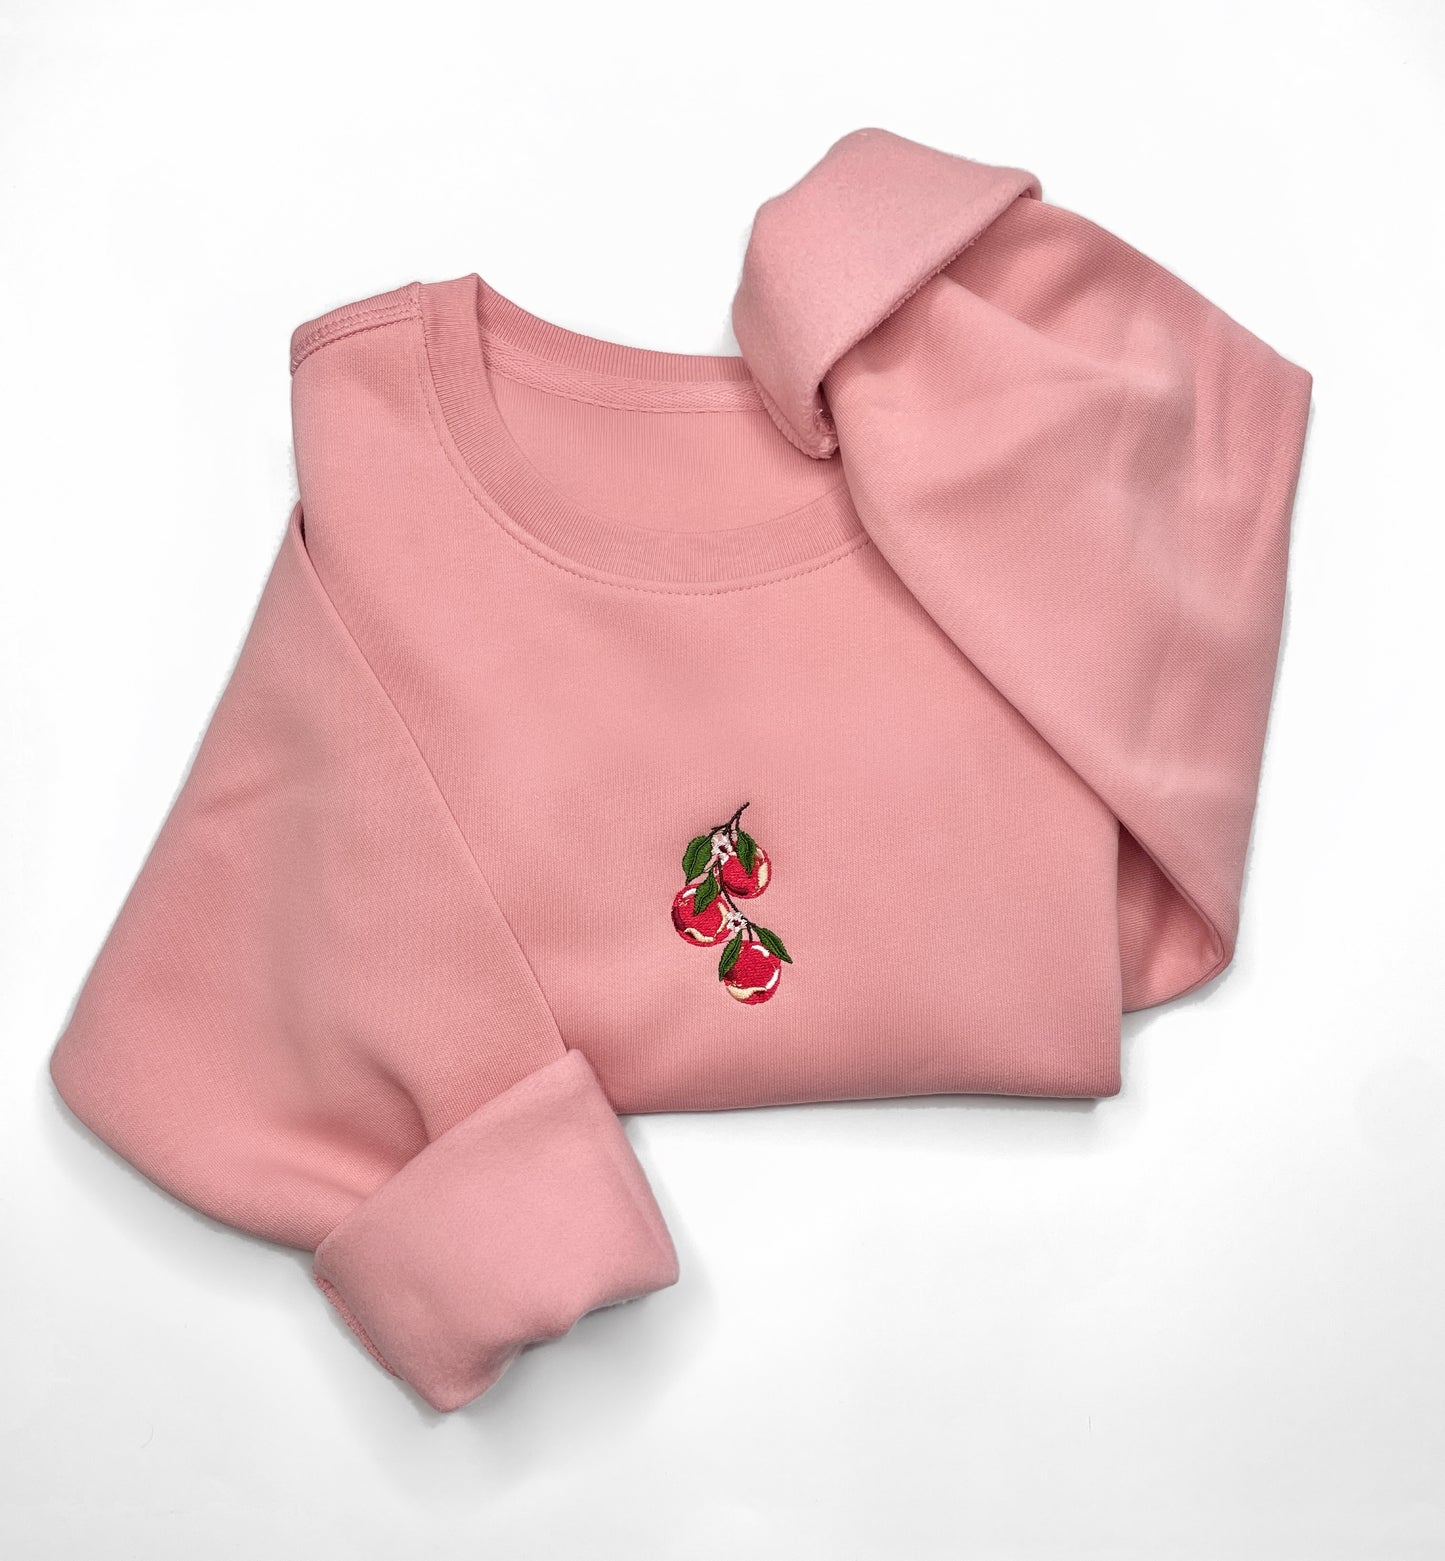 Embroidered Sweatshirt - 'Apple Pawtumn Jeans'